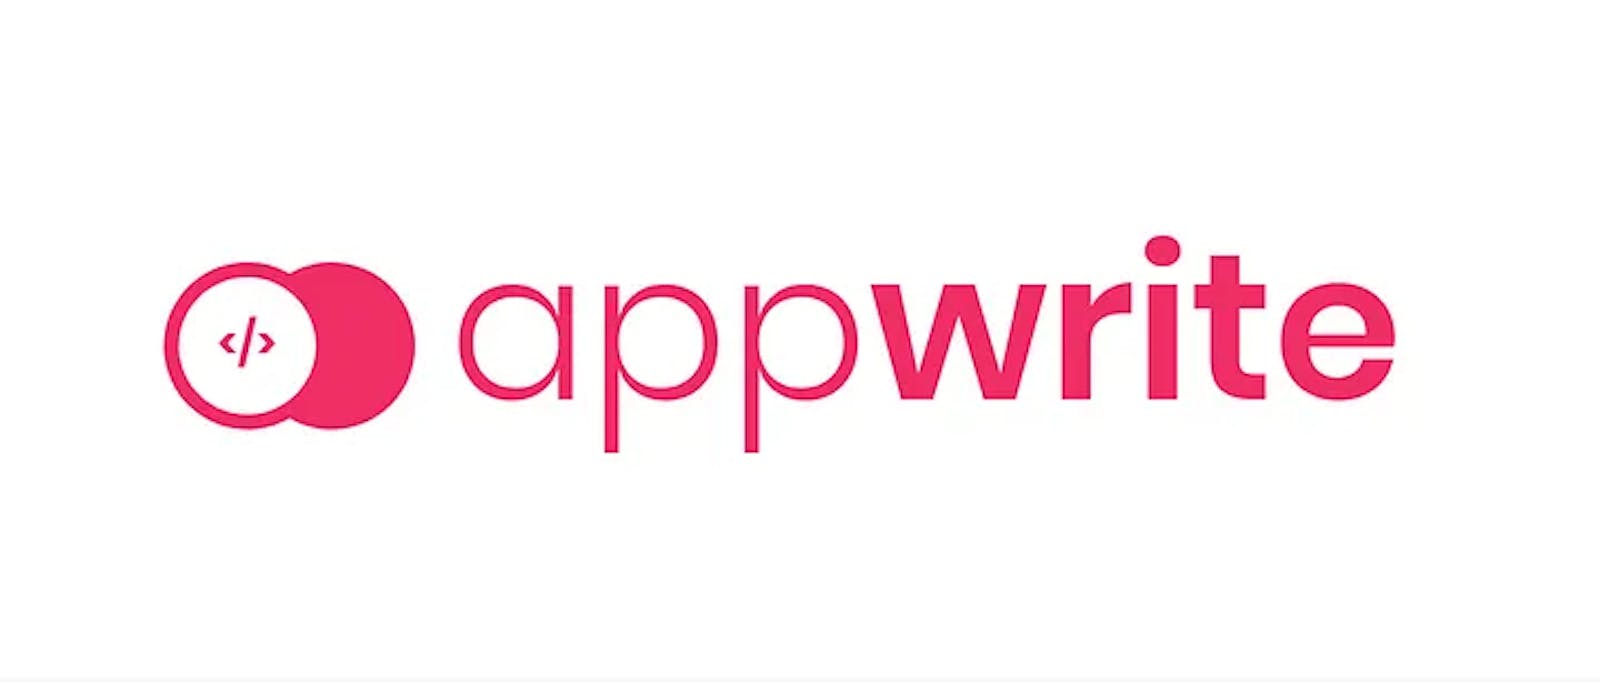 What's Appwrite? Let's Explore It!